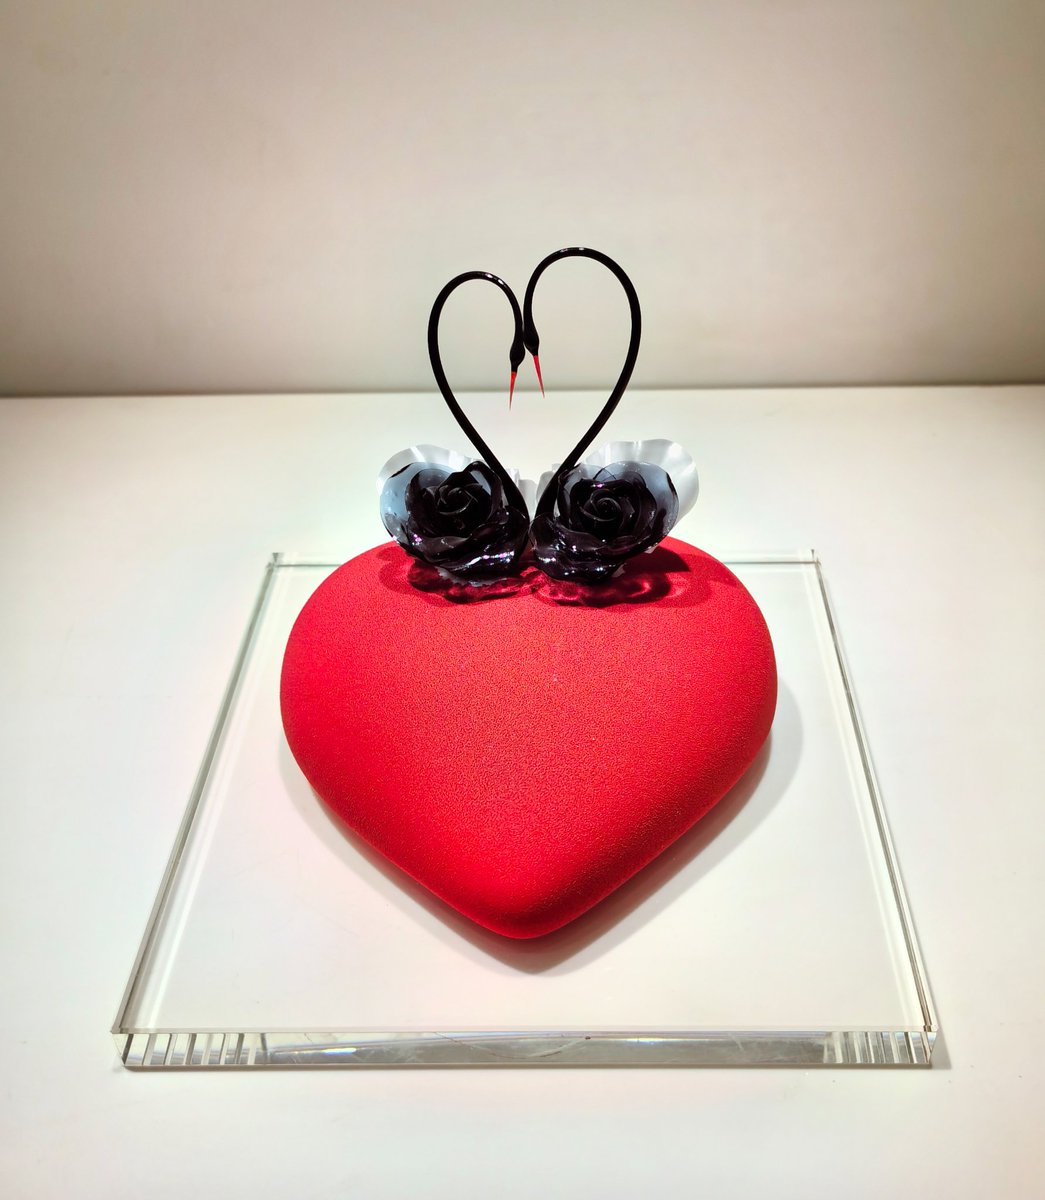 Swan #cakes 🍰 #art #foodlovers #dessert